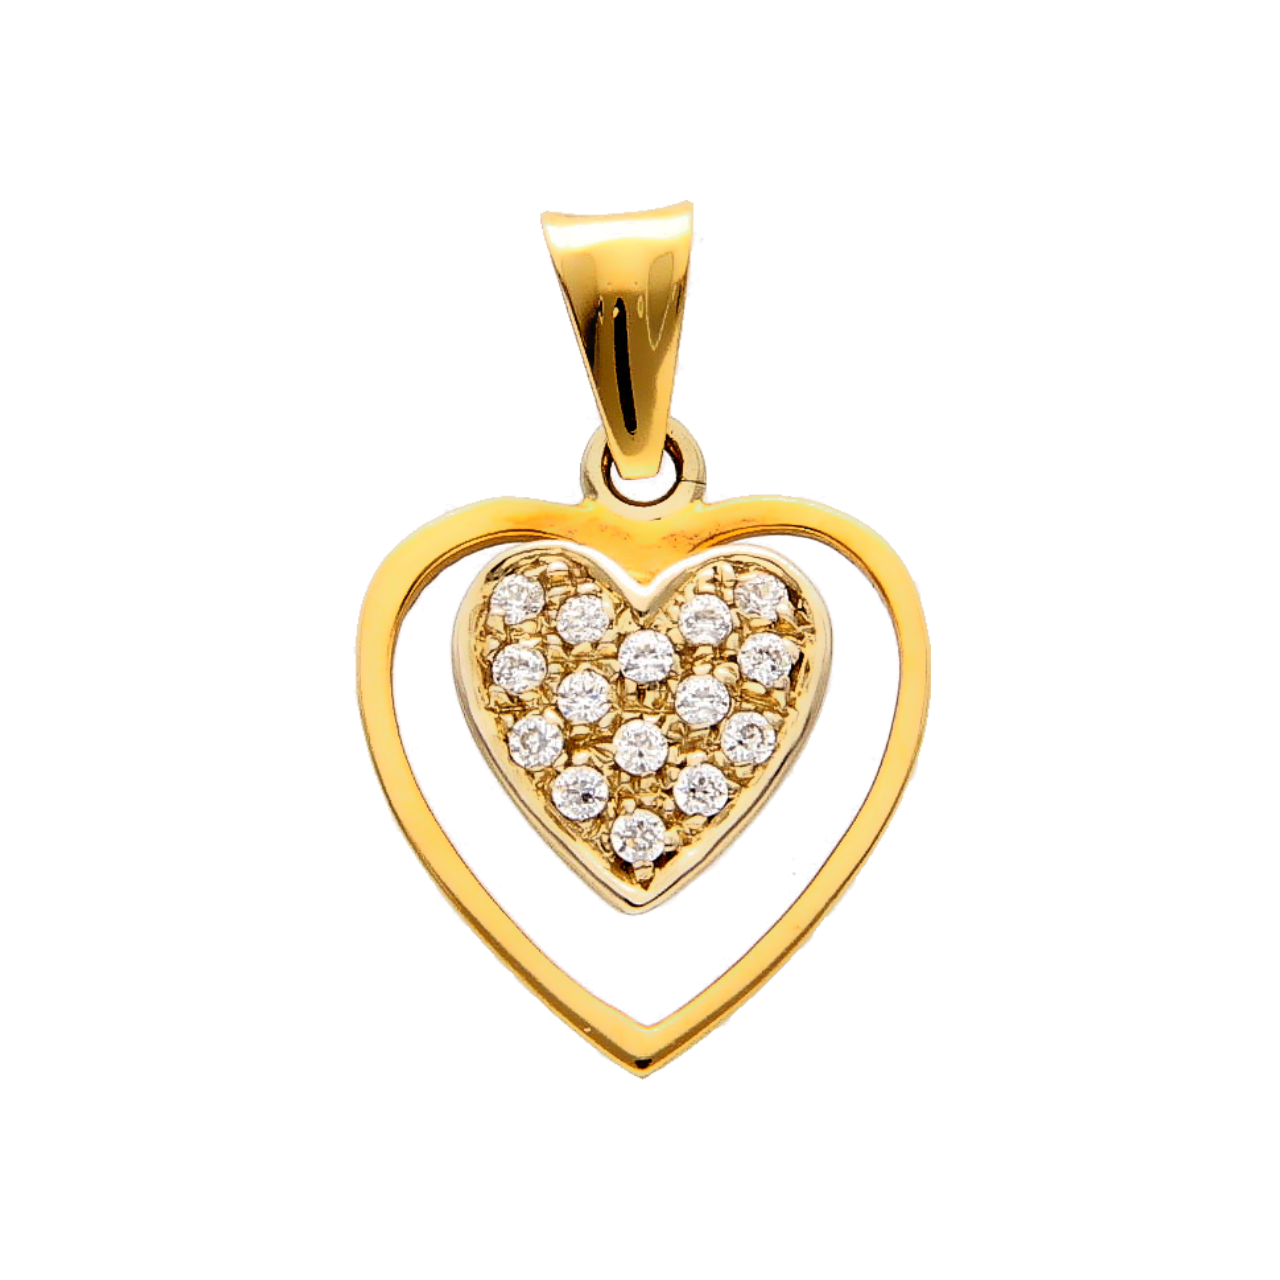 Heart pendant yellow gold with zircons